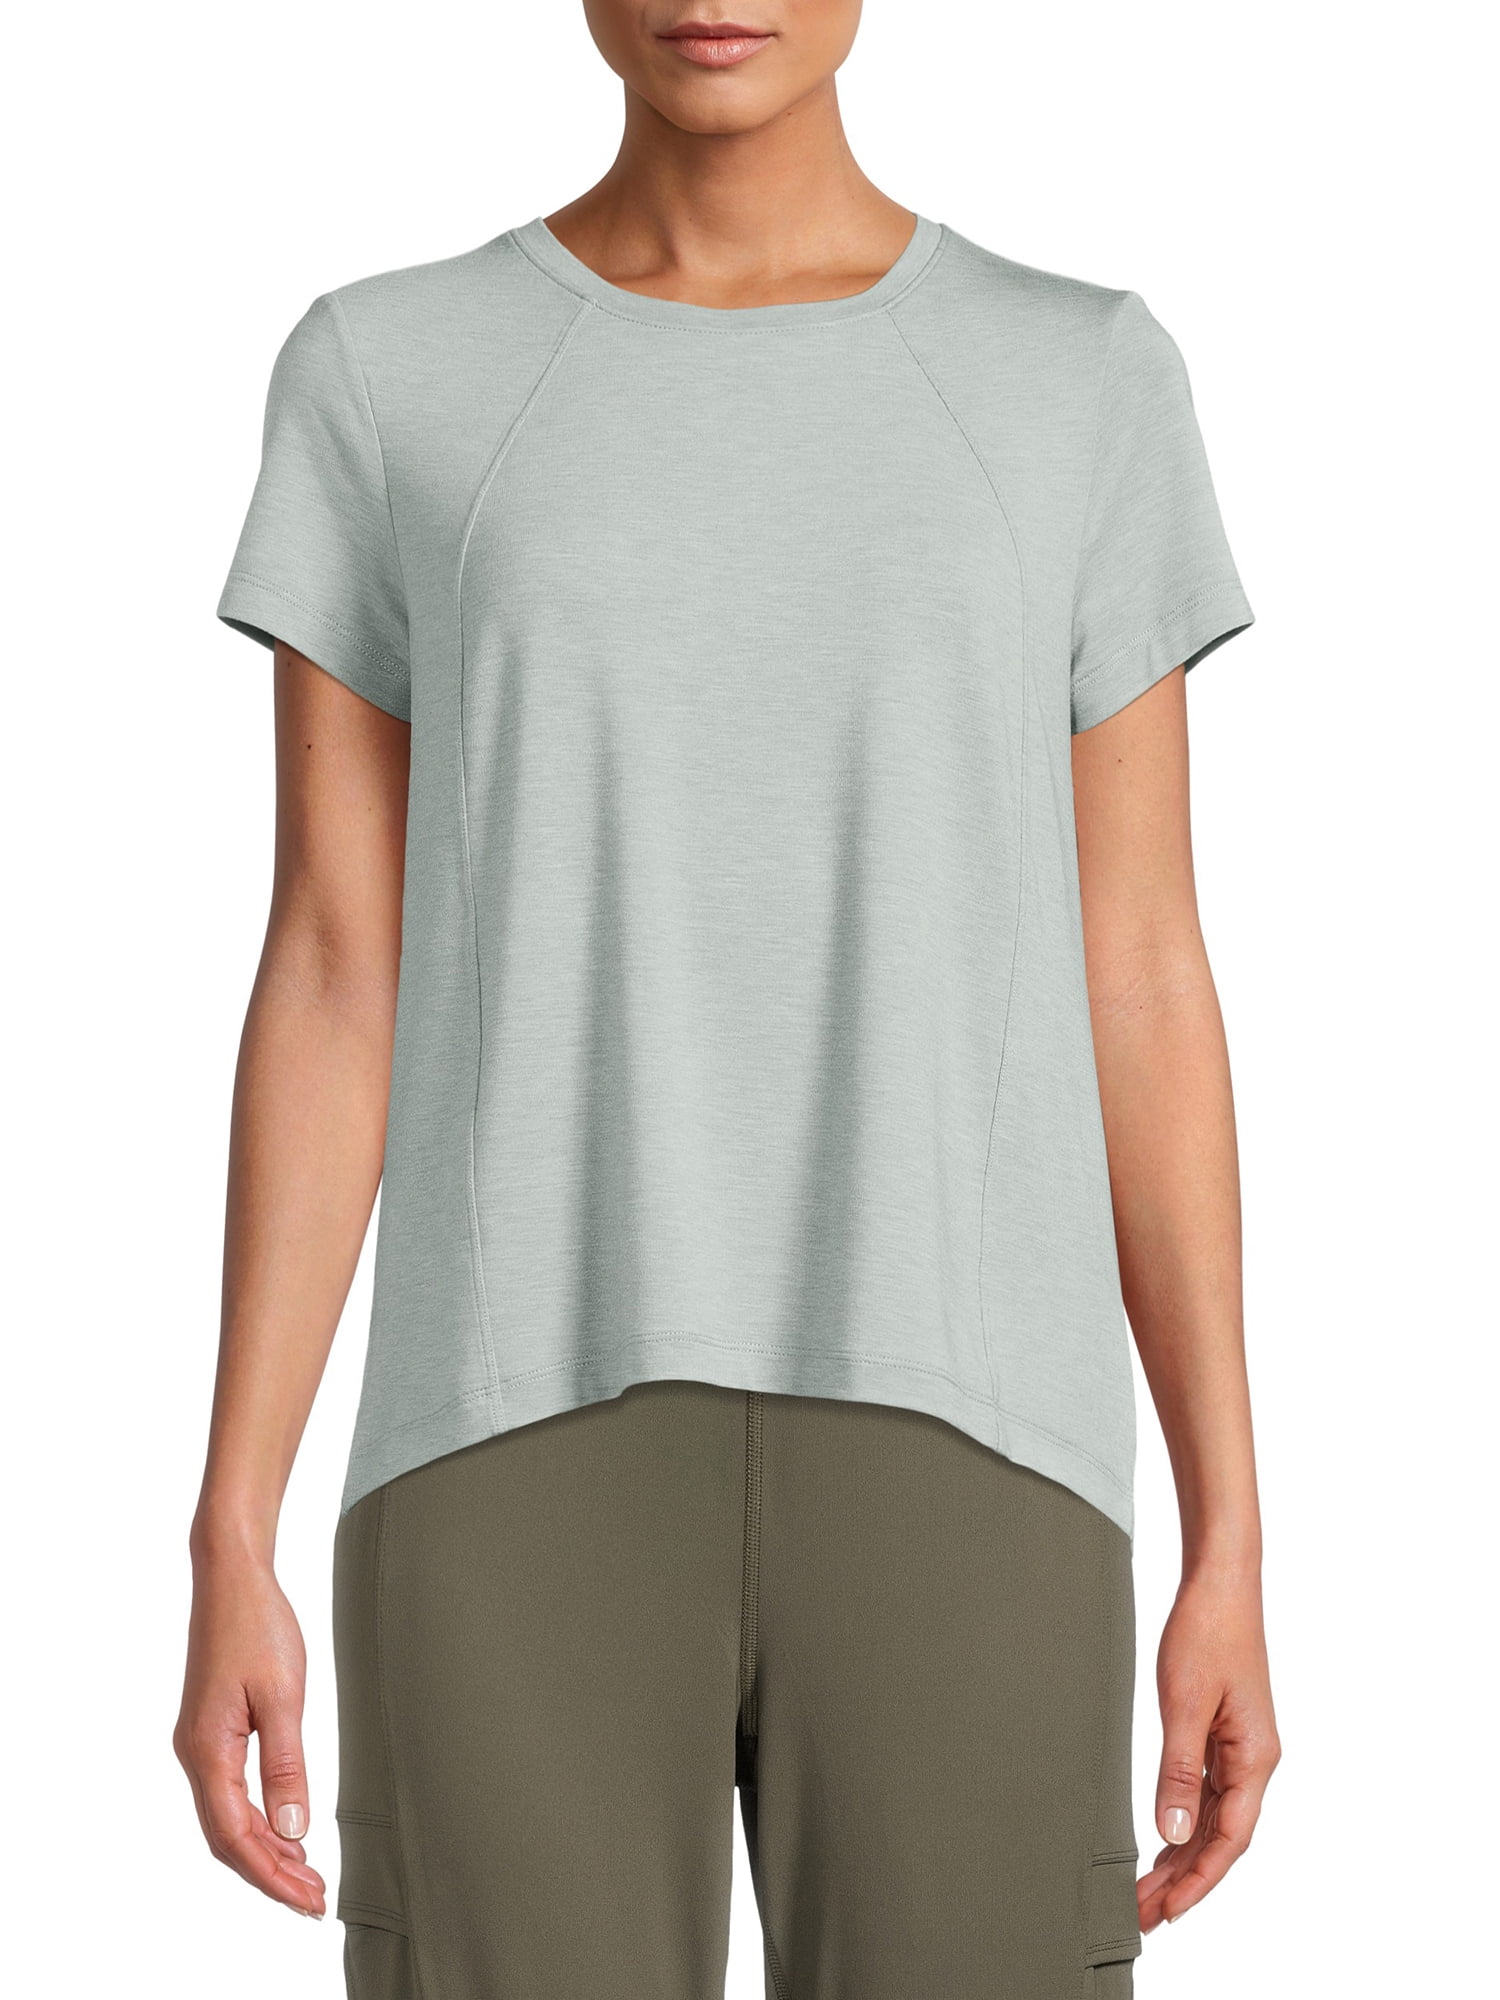 Avia Women's Short Sleeve T-Shirt, Sizes up to XXXL